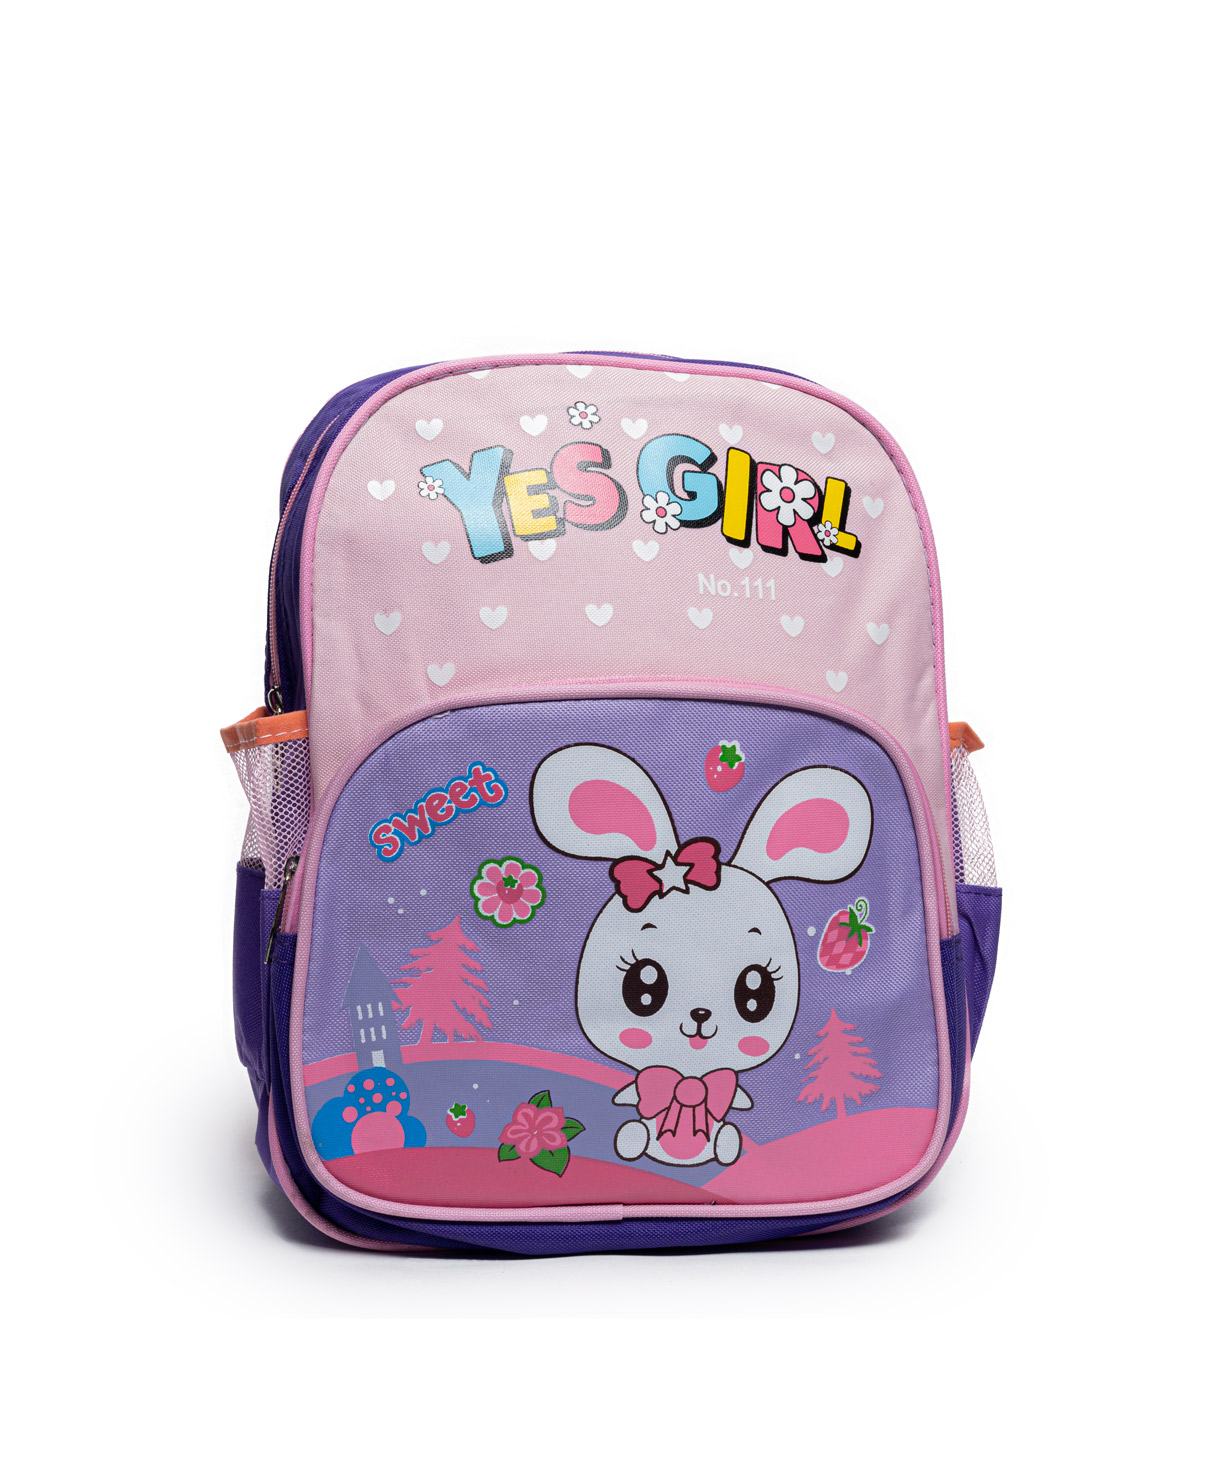 Kids backpack №81